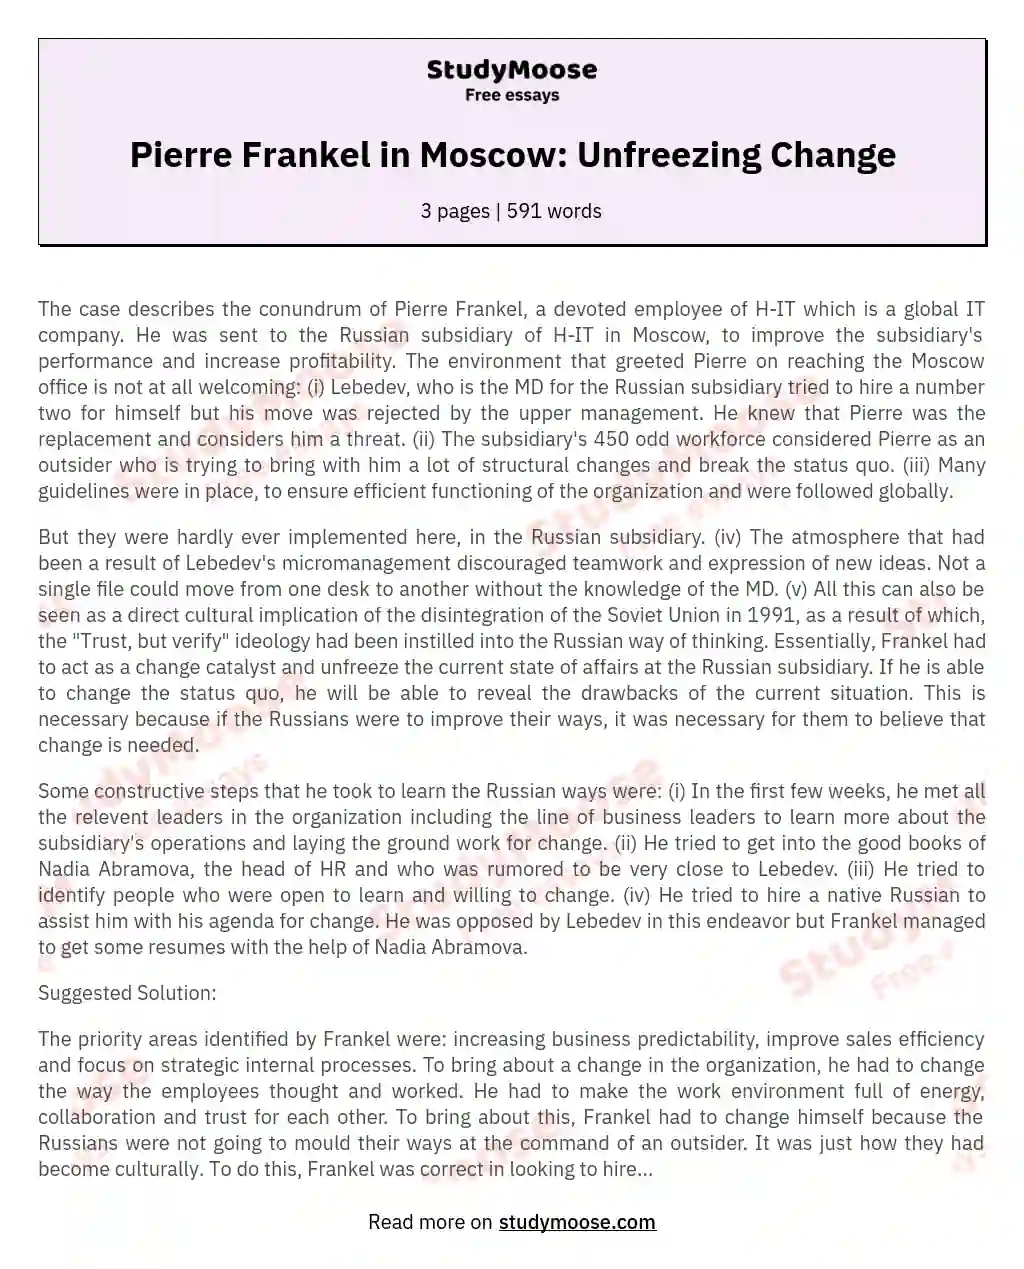 Pierre Frankel in Moscow: Unfreezing Change essay